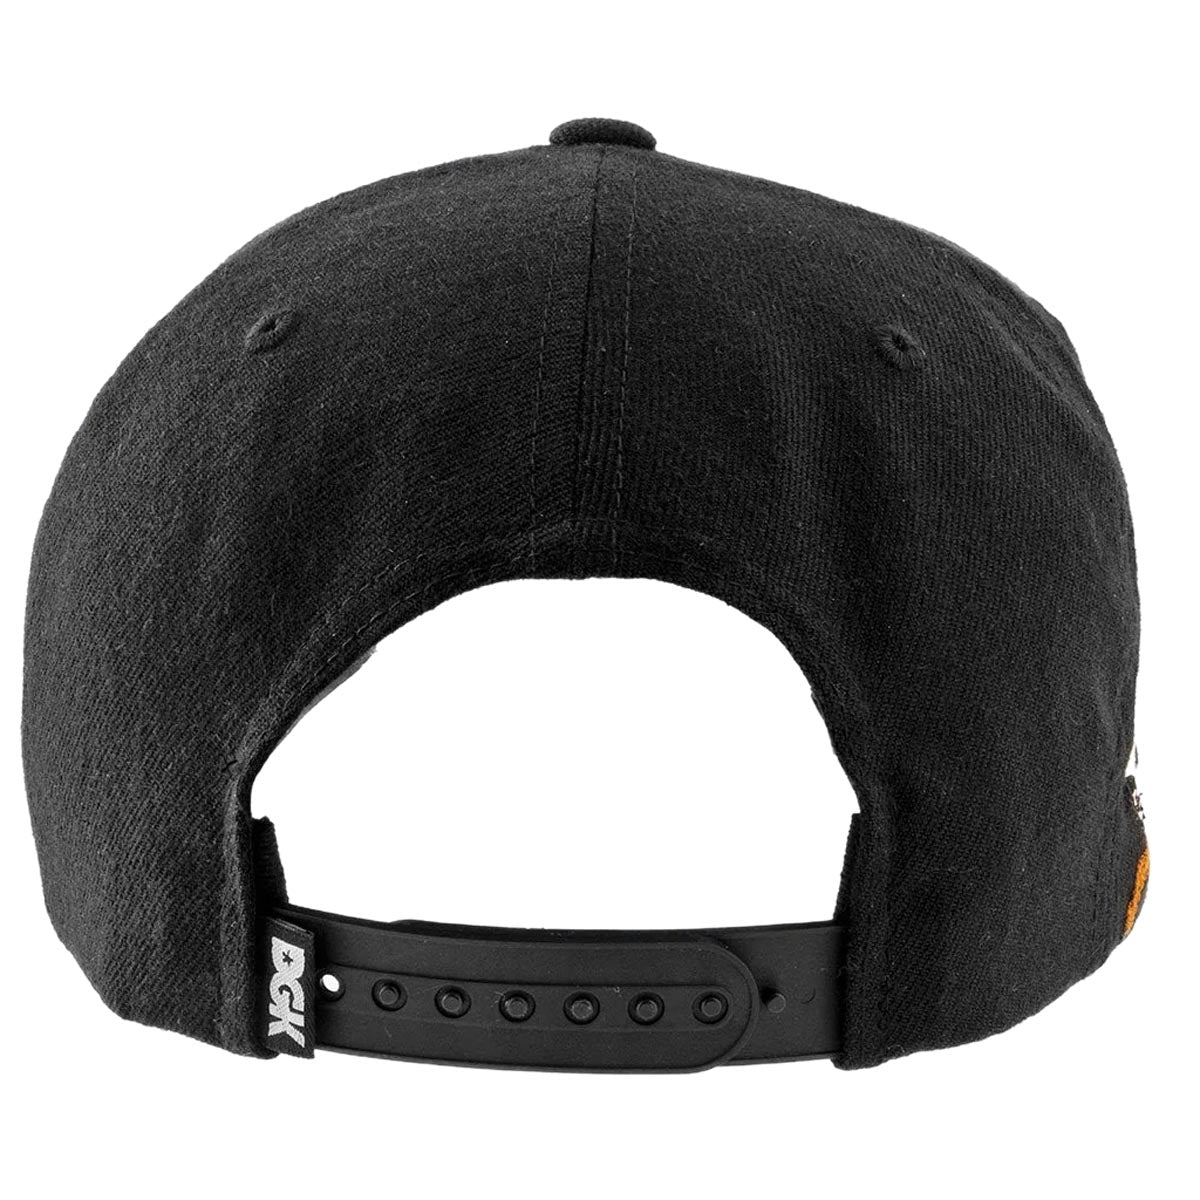 DGK Fire Blossom Snapback Hat - Black image 2